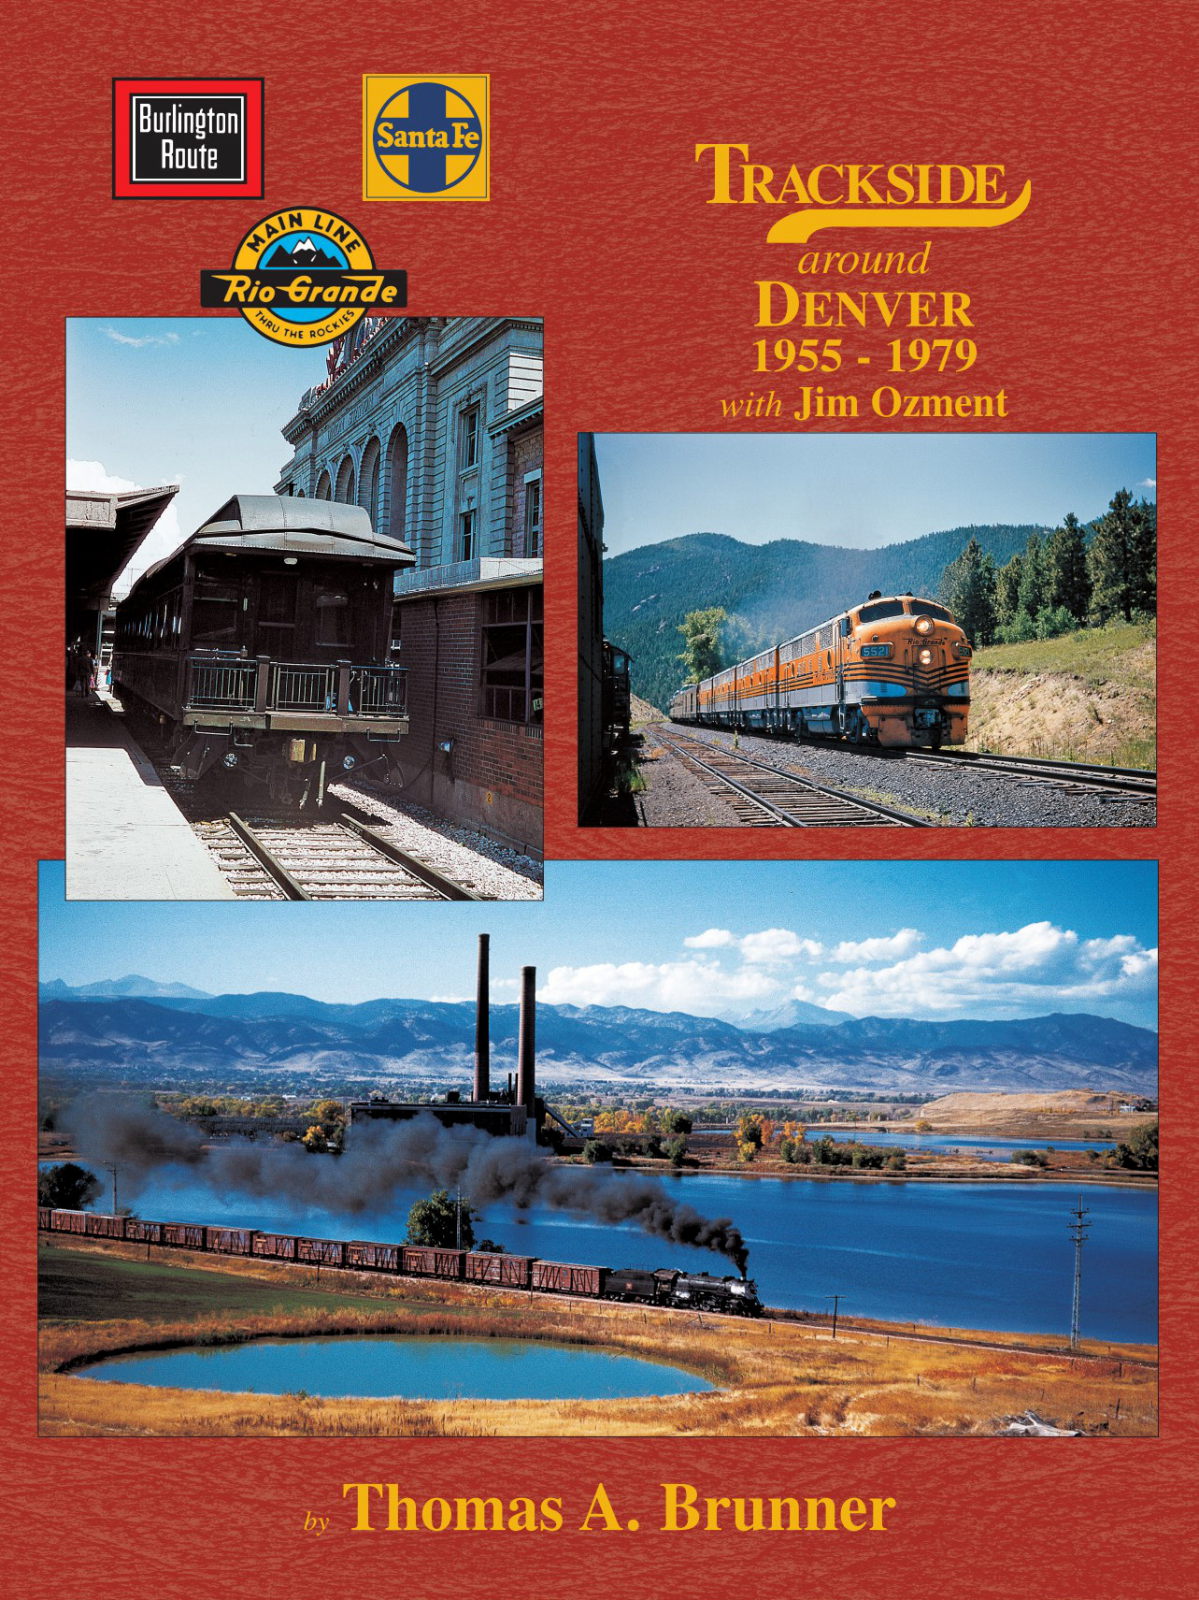 Trackside around Denver 1955-1979 with Jim Ozment